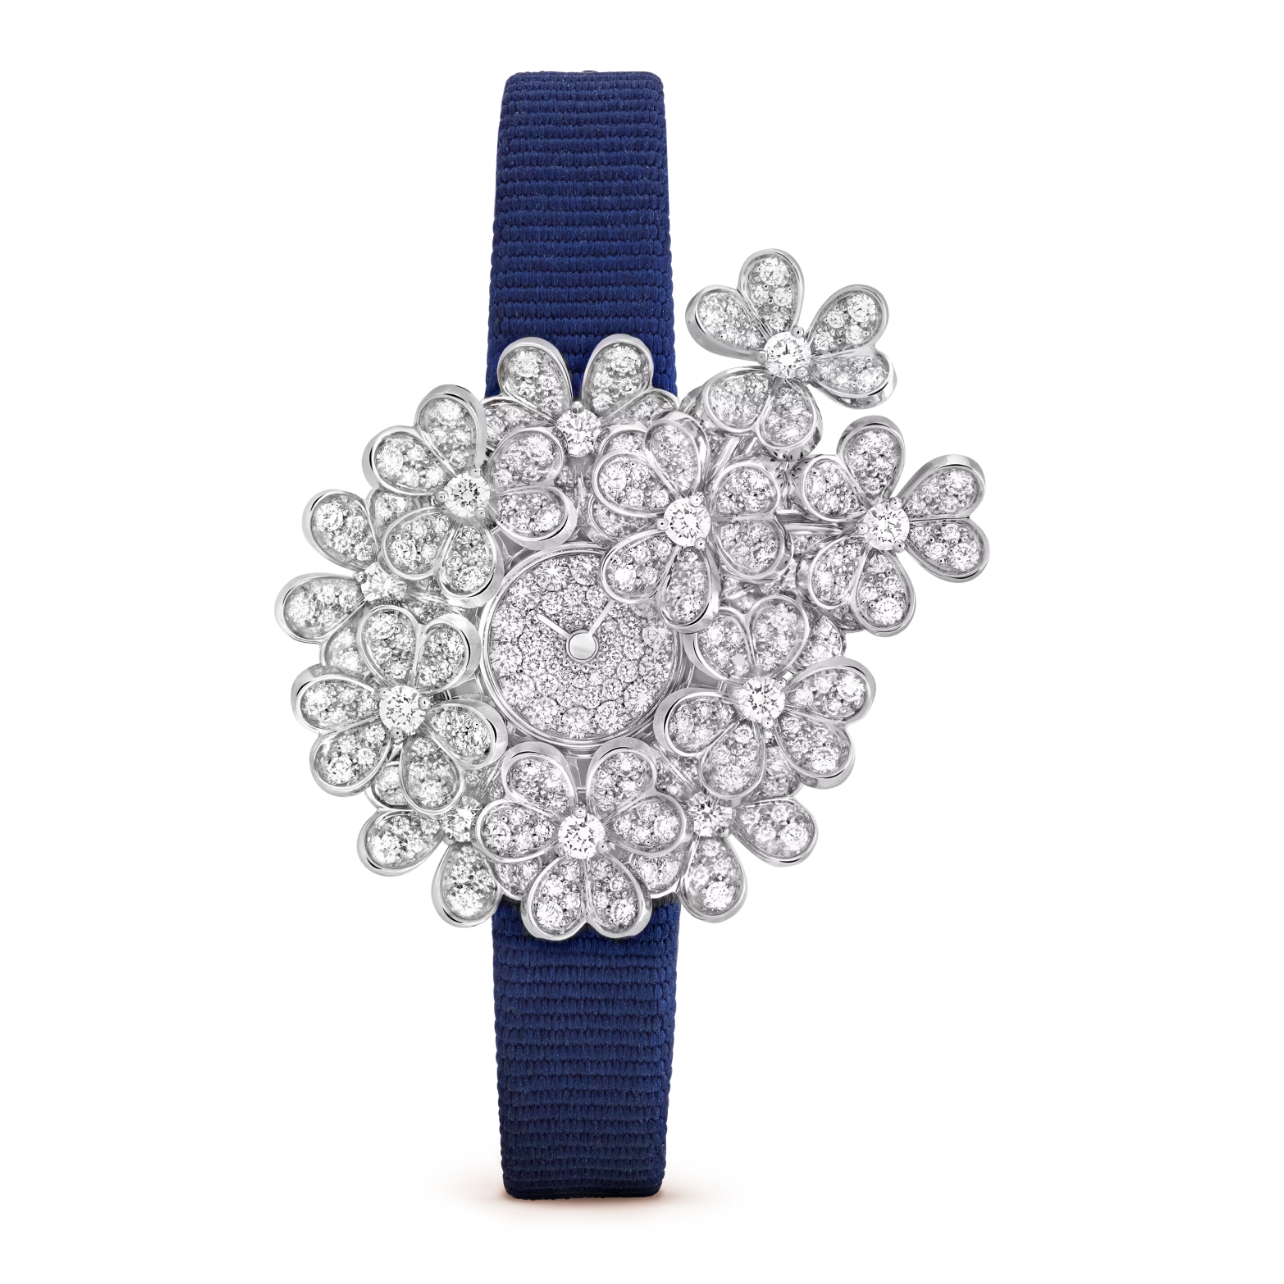 Van Cleef & Arpels frivole secrete watch with white gold and diamonds